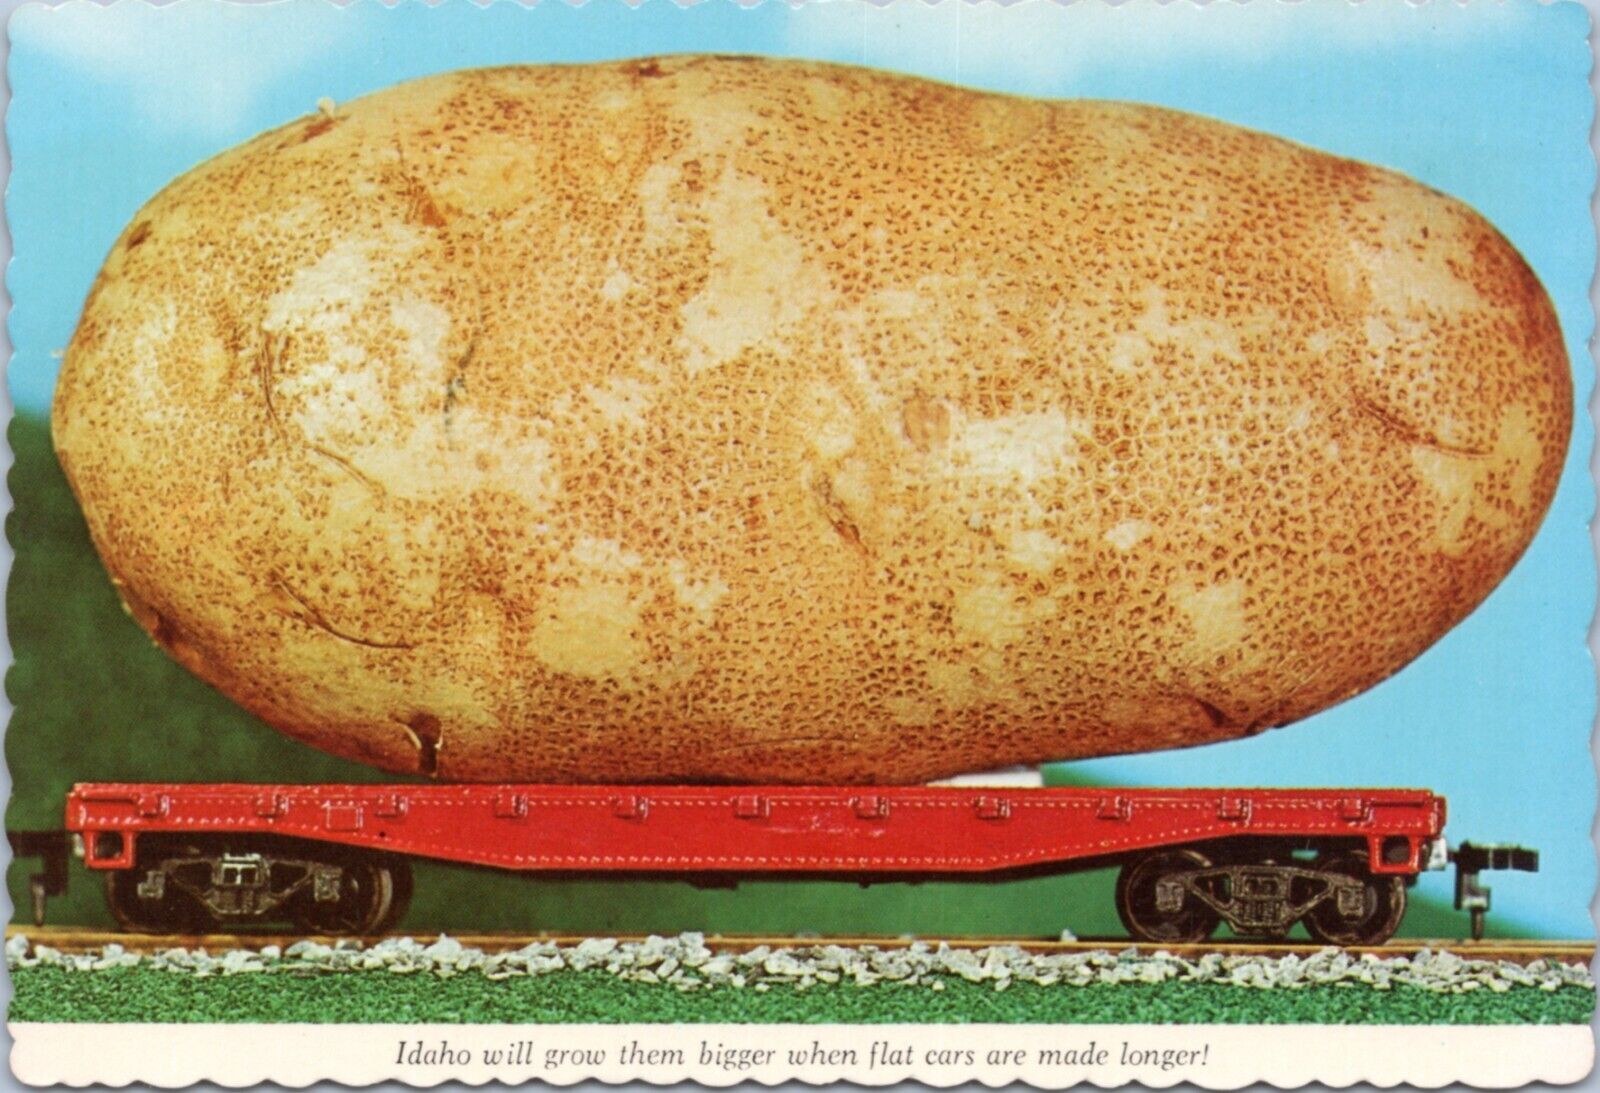 Postcard Exaggeration - Giant Idaho potato on flat train car